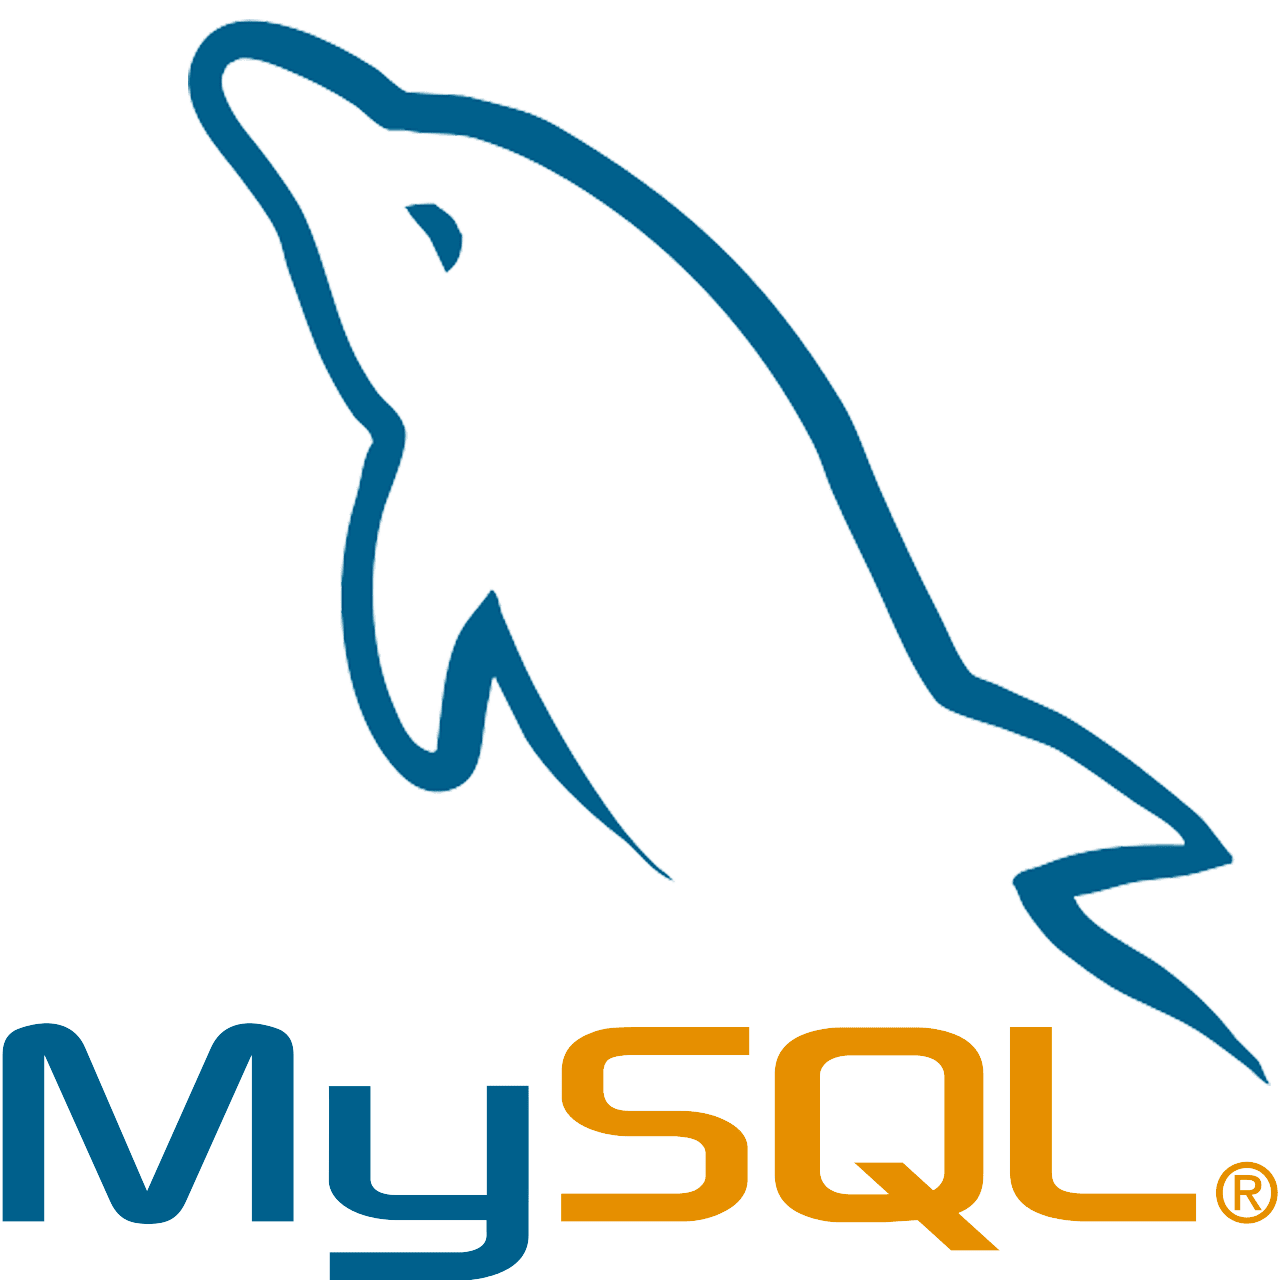 Sync data from MySQL to CockroachDB.